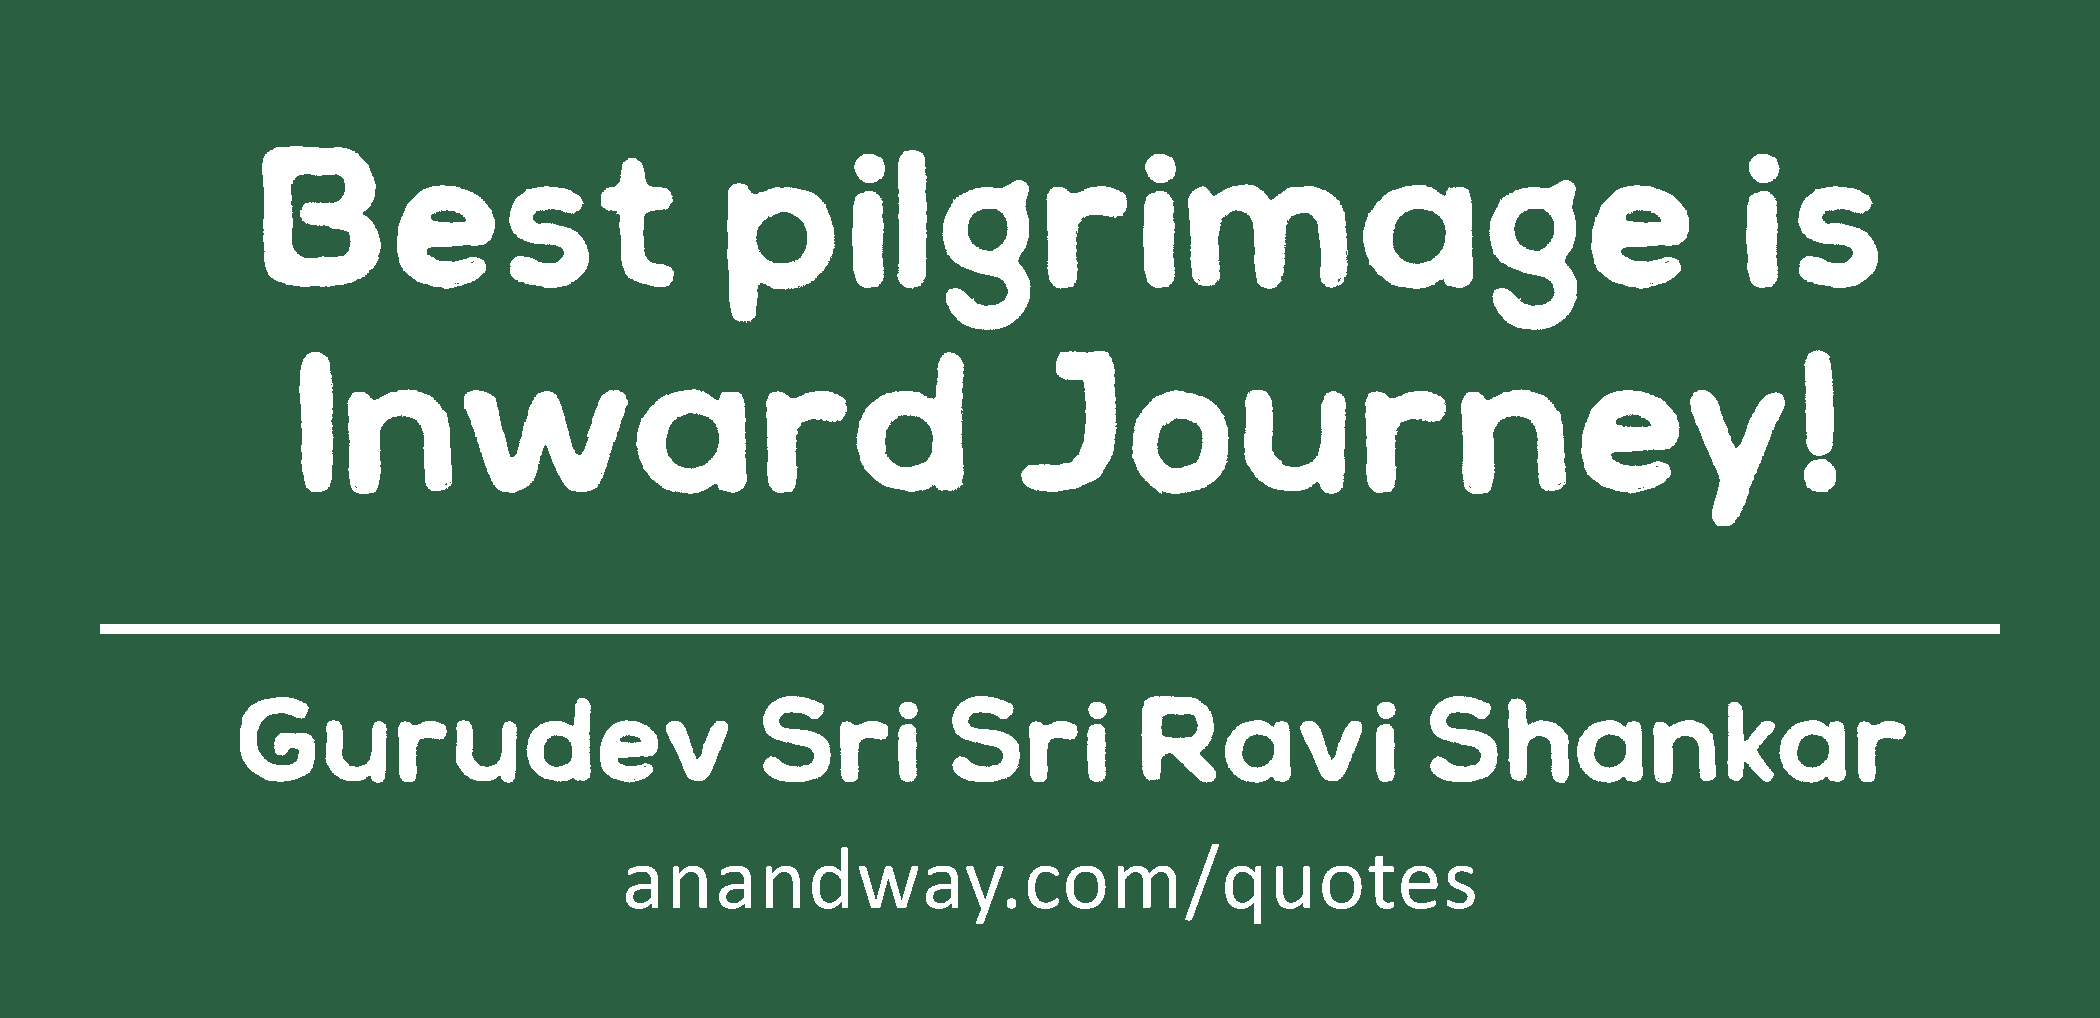 Best pilgrimage is Inward Journey! 
 -Gurudev Sri Sri Ravi Shankar